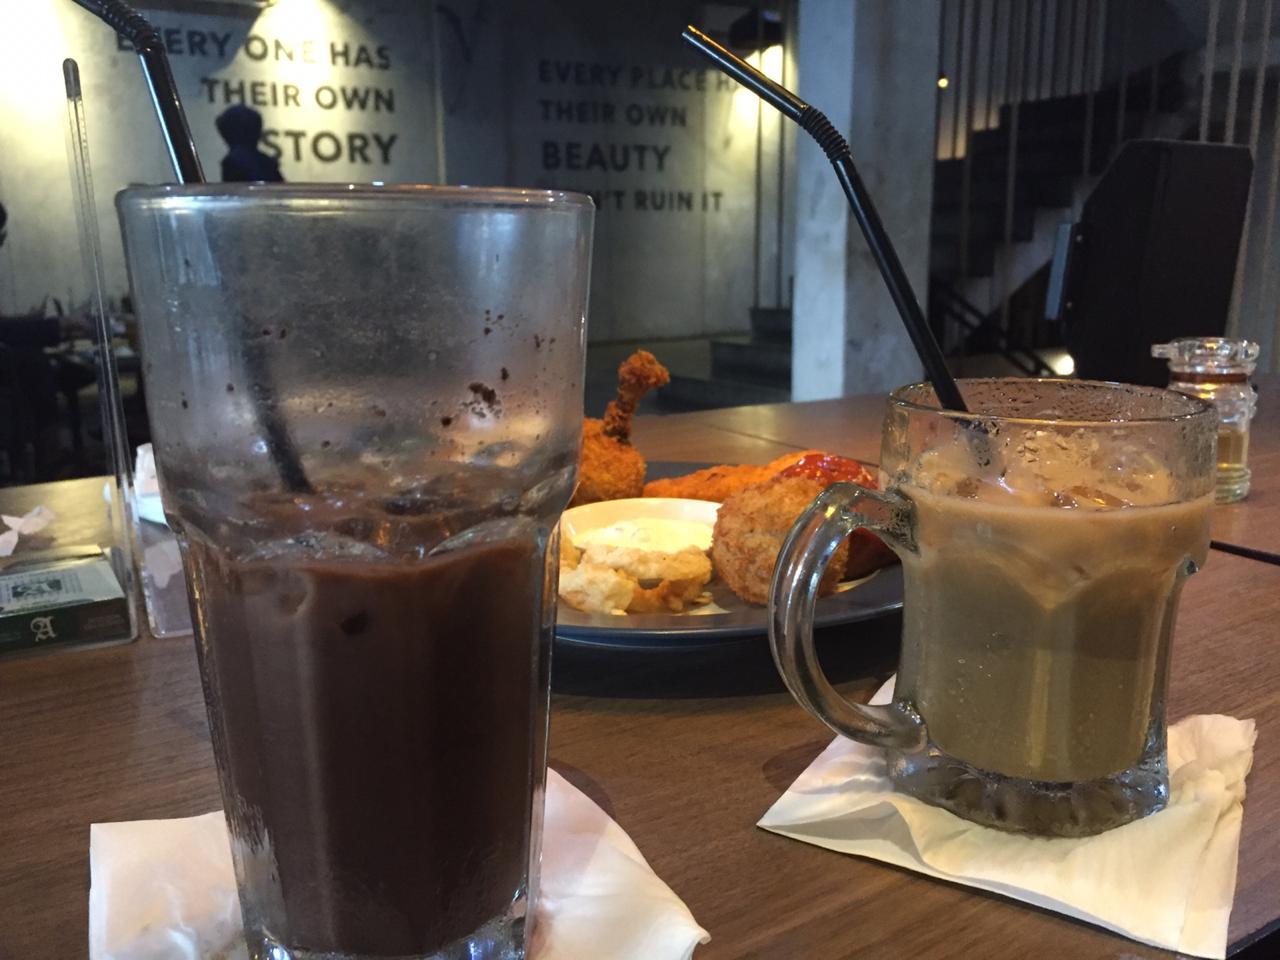 Honest Review Beranda Depok Cafe &amp; Resto, Worth It Gak Ya?